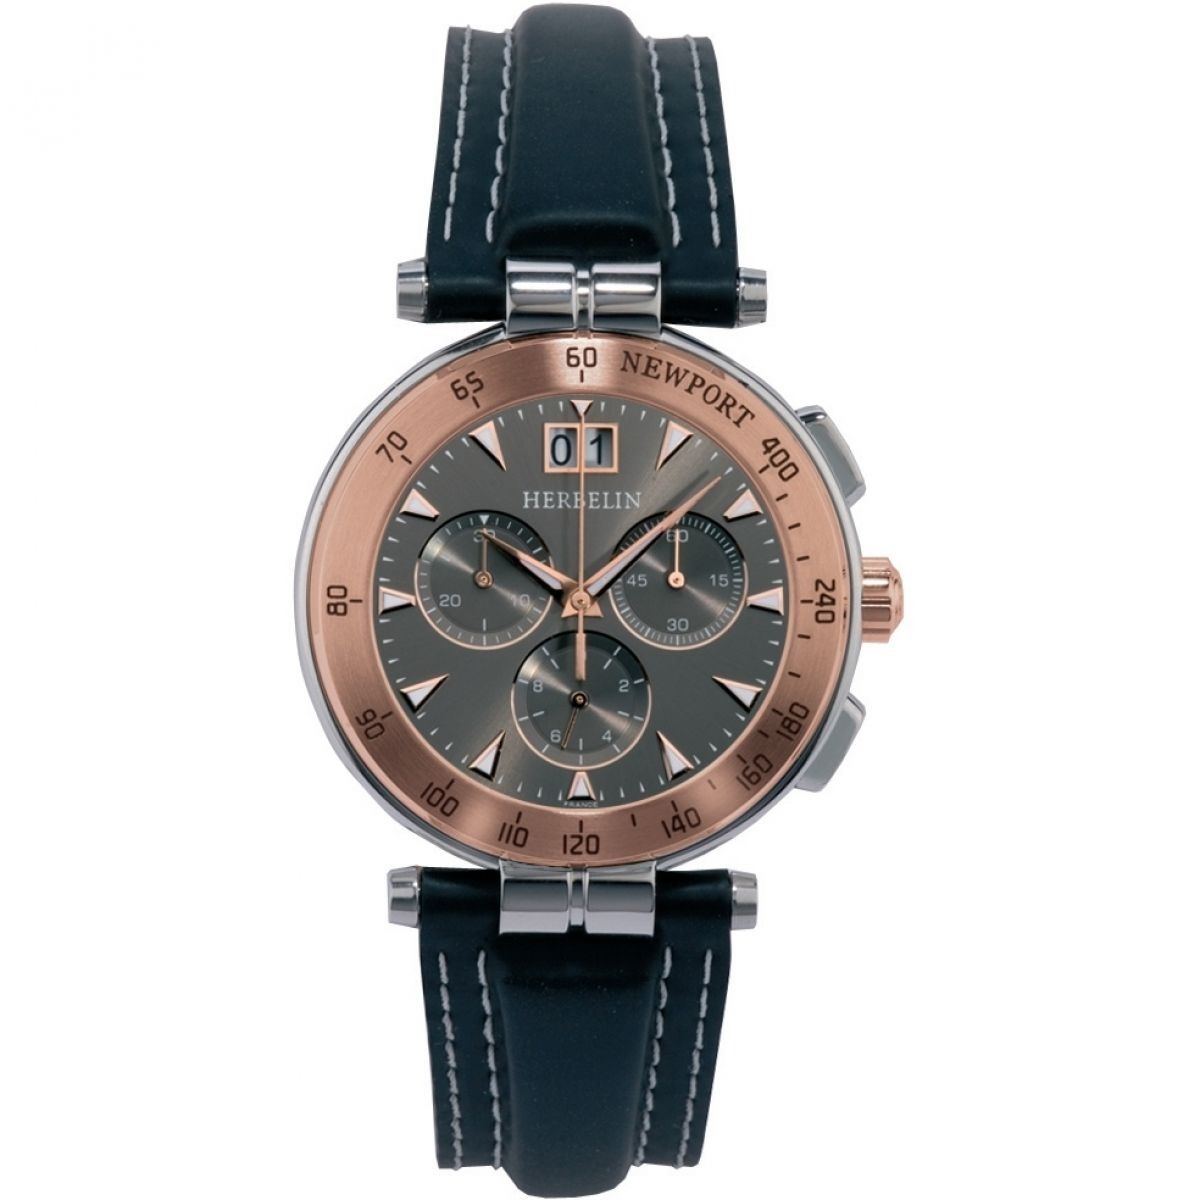 Michel Herbelin - Men's Chronograph Watch in Grey by Watch Shop GOOFASH